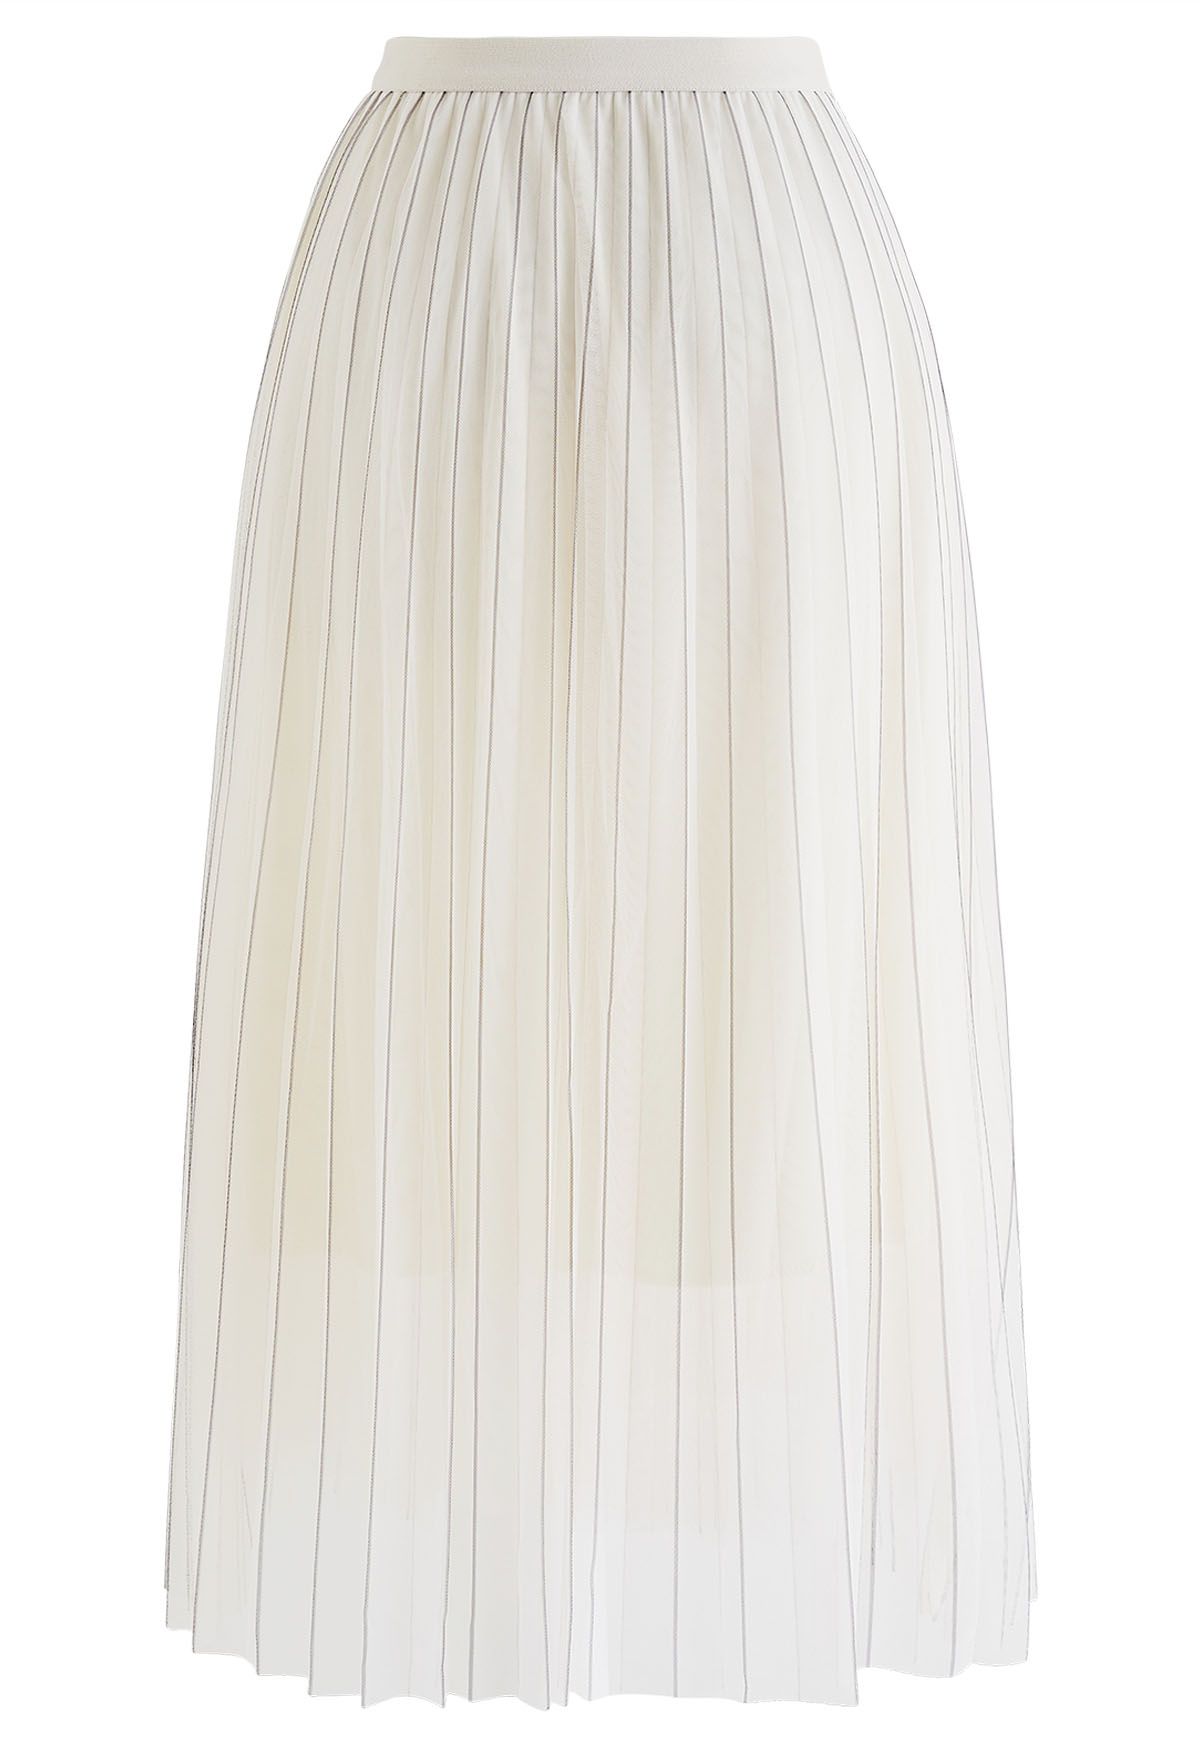 Contrast Lines Pleated Mesh Tulle Midi Skirt in Cream - Retro, Indie ...